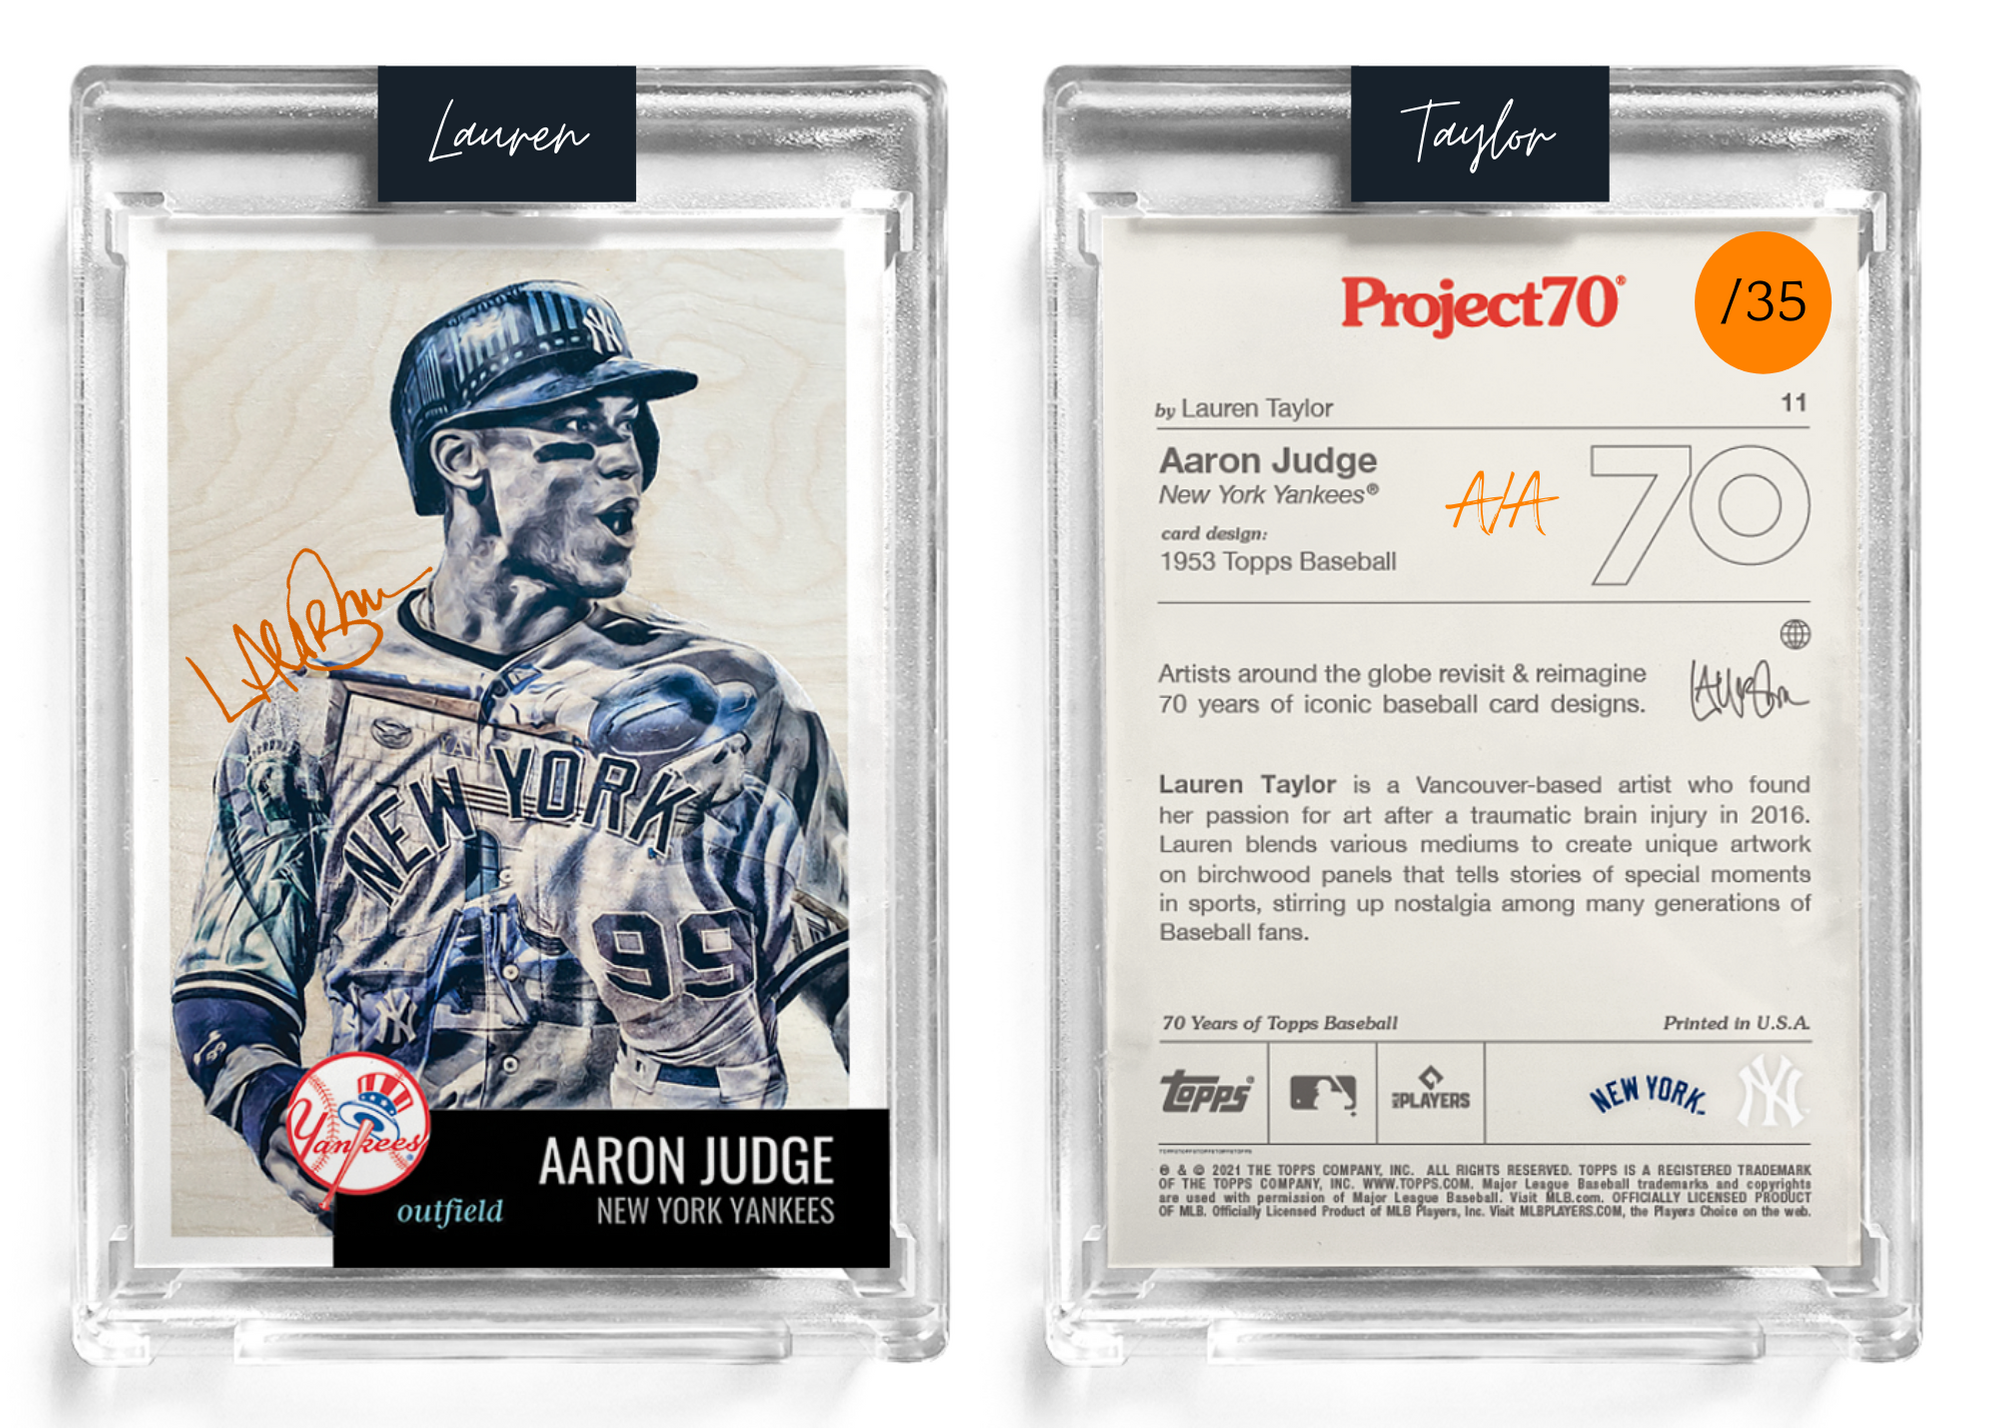 /35 Orange Artist Signature - Topps Project 70 130pt card #11 by Lauren Taylor - Aaron Judge